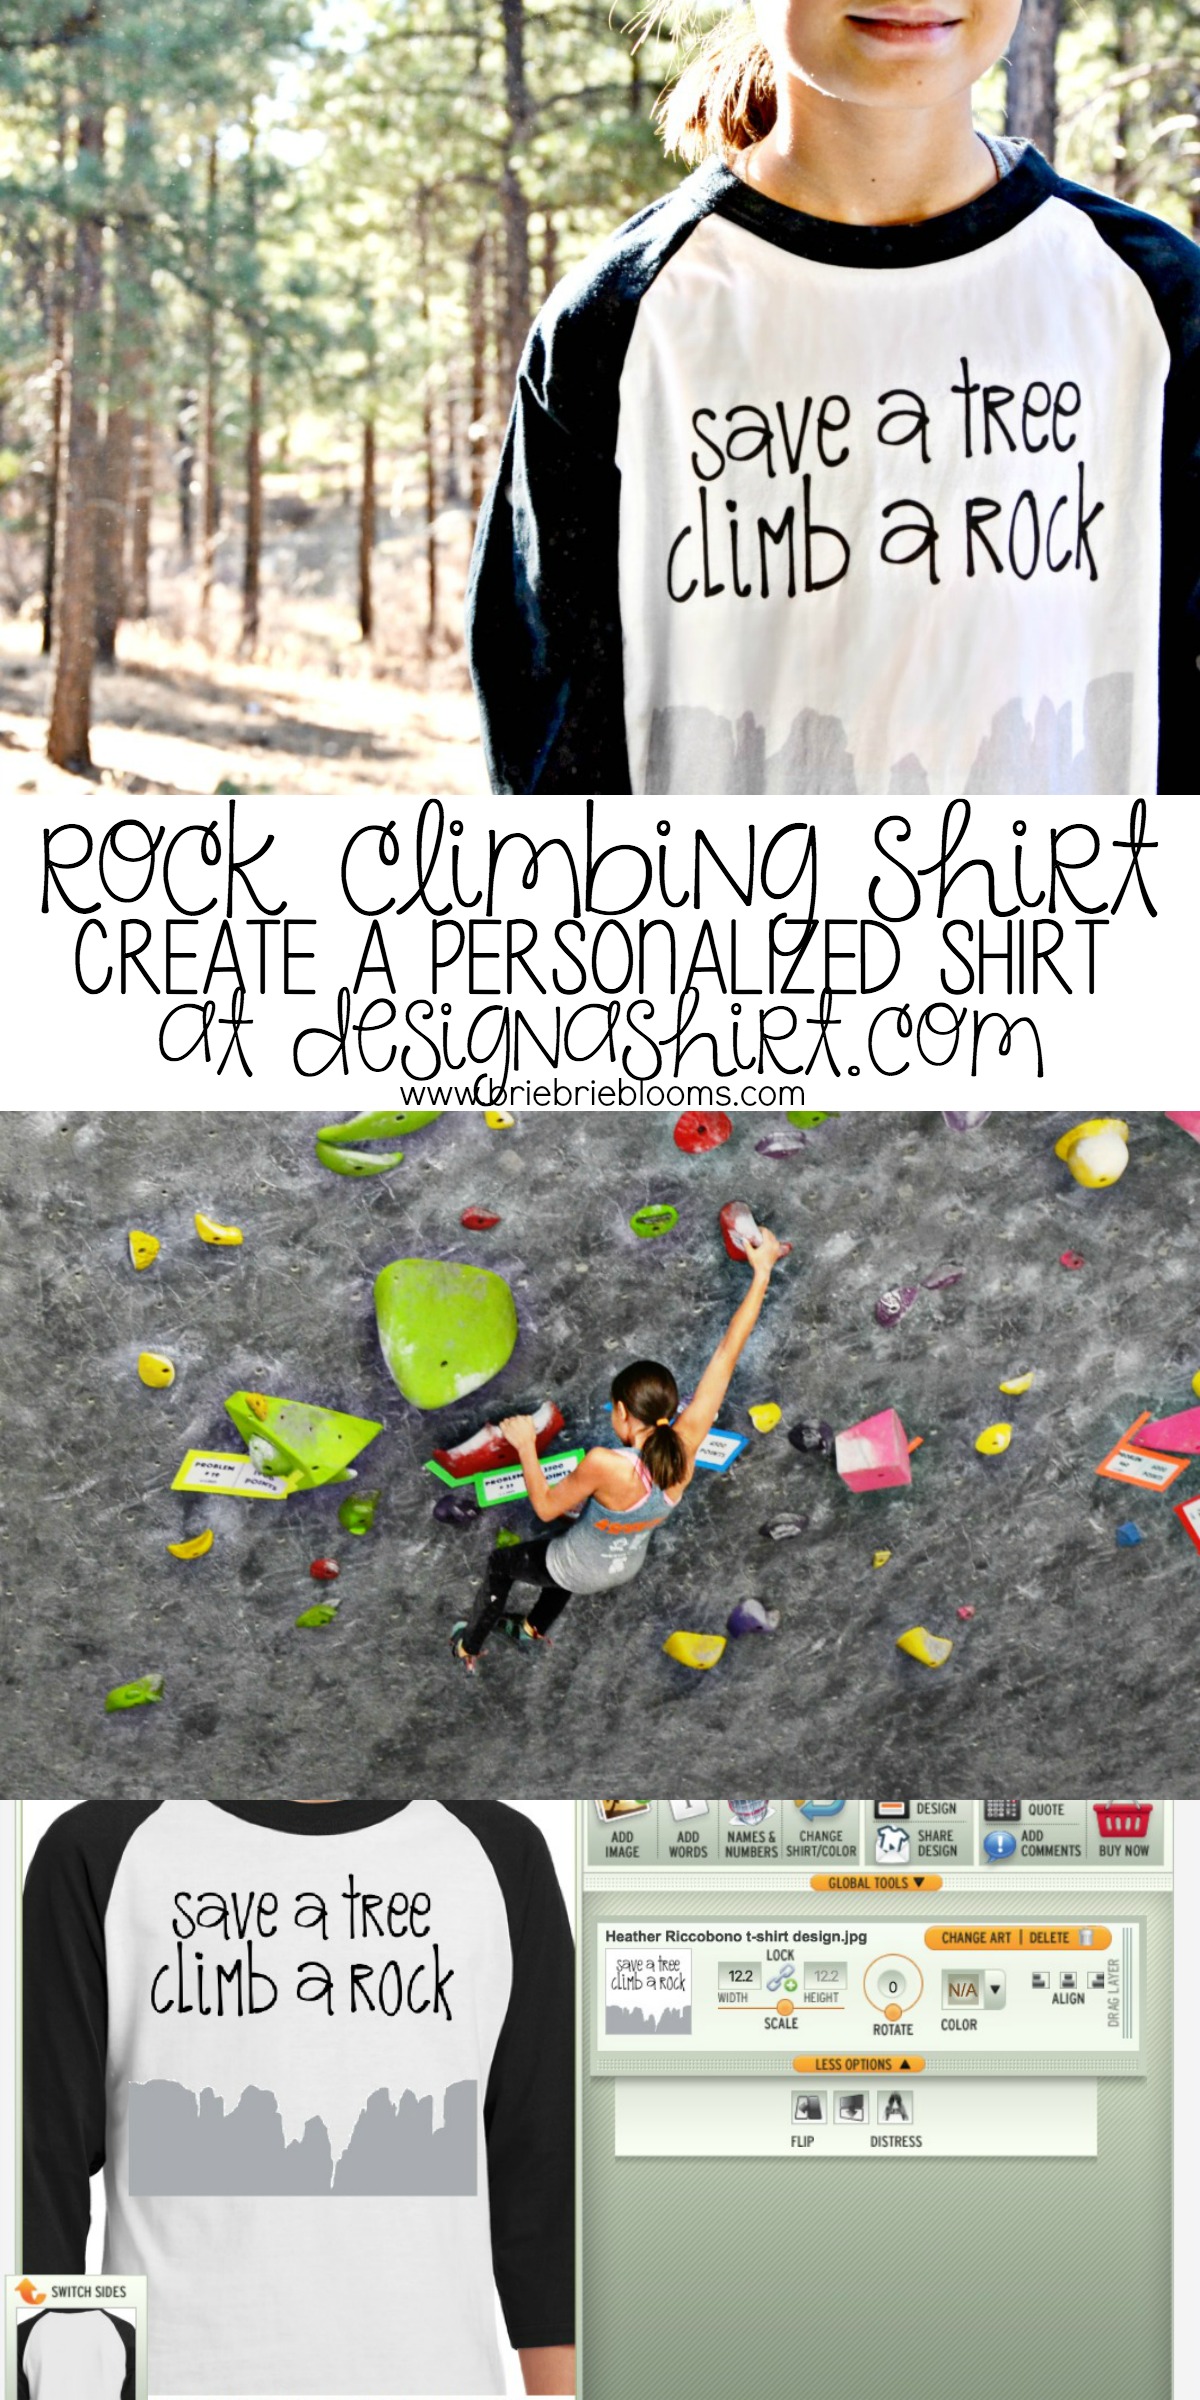 Make our rock climbing shirt or create a personalized shirt at DesignAShirt.com. Free save a tree climb a rock print to use for shirt design!